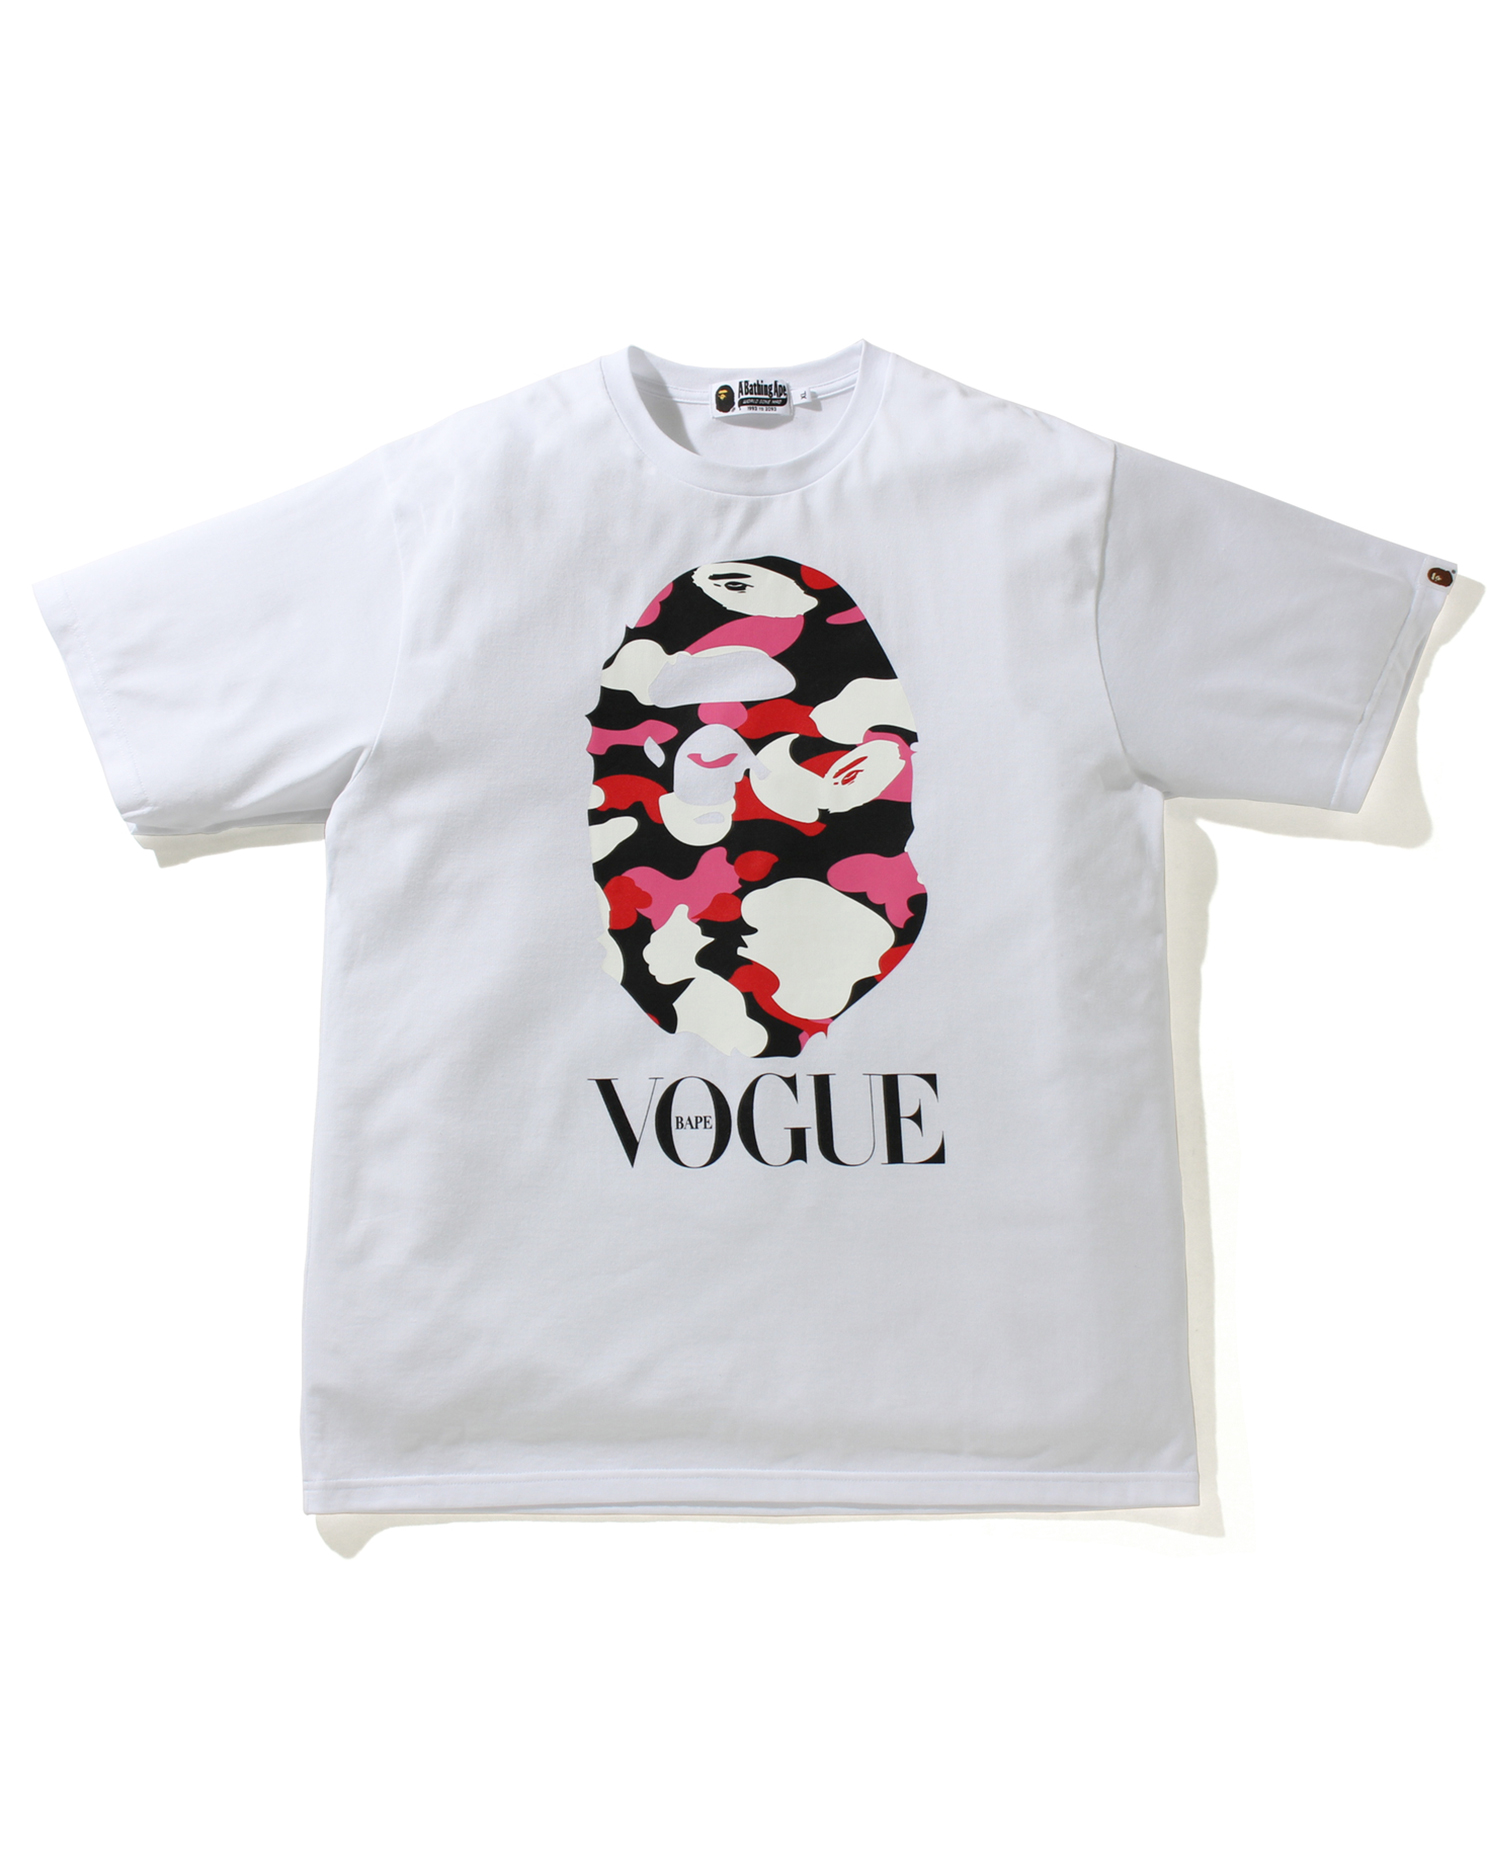 Shop X Vogue Tee 2 Online | BAPE